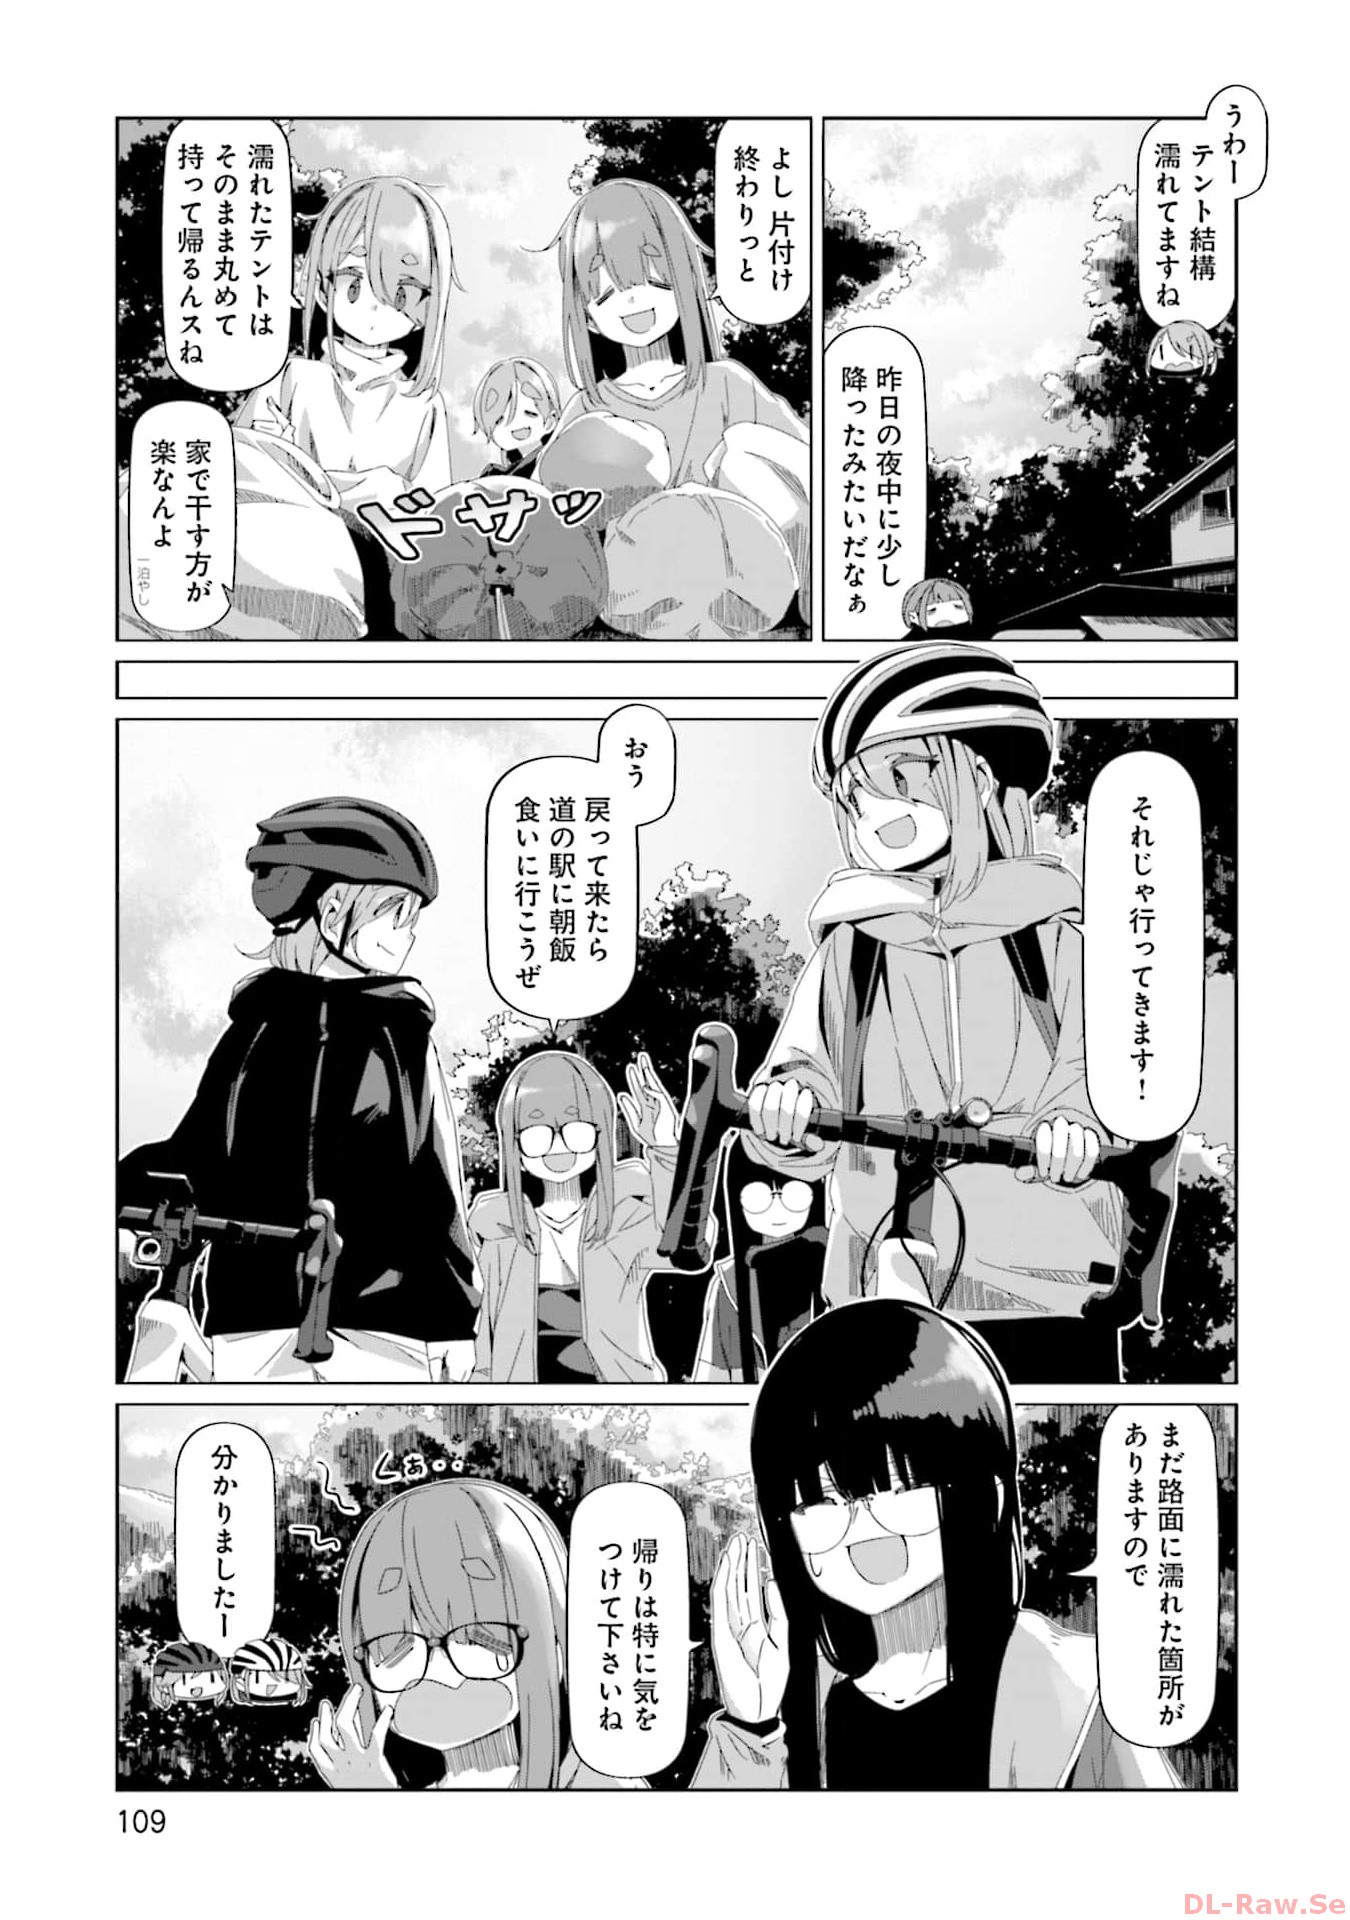 Yuru Camp - Chapter 86 - Page 1